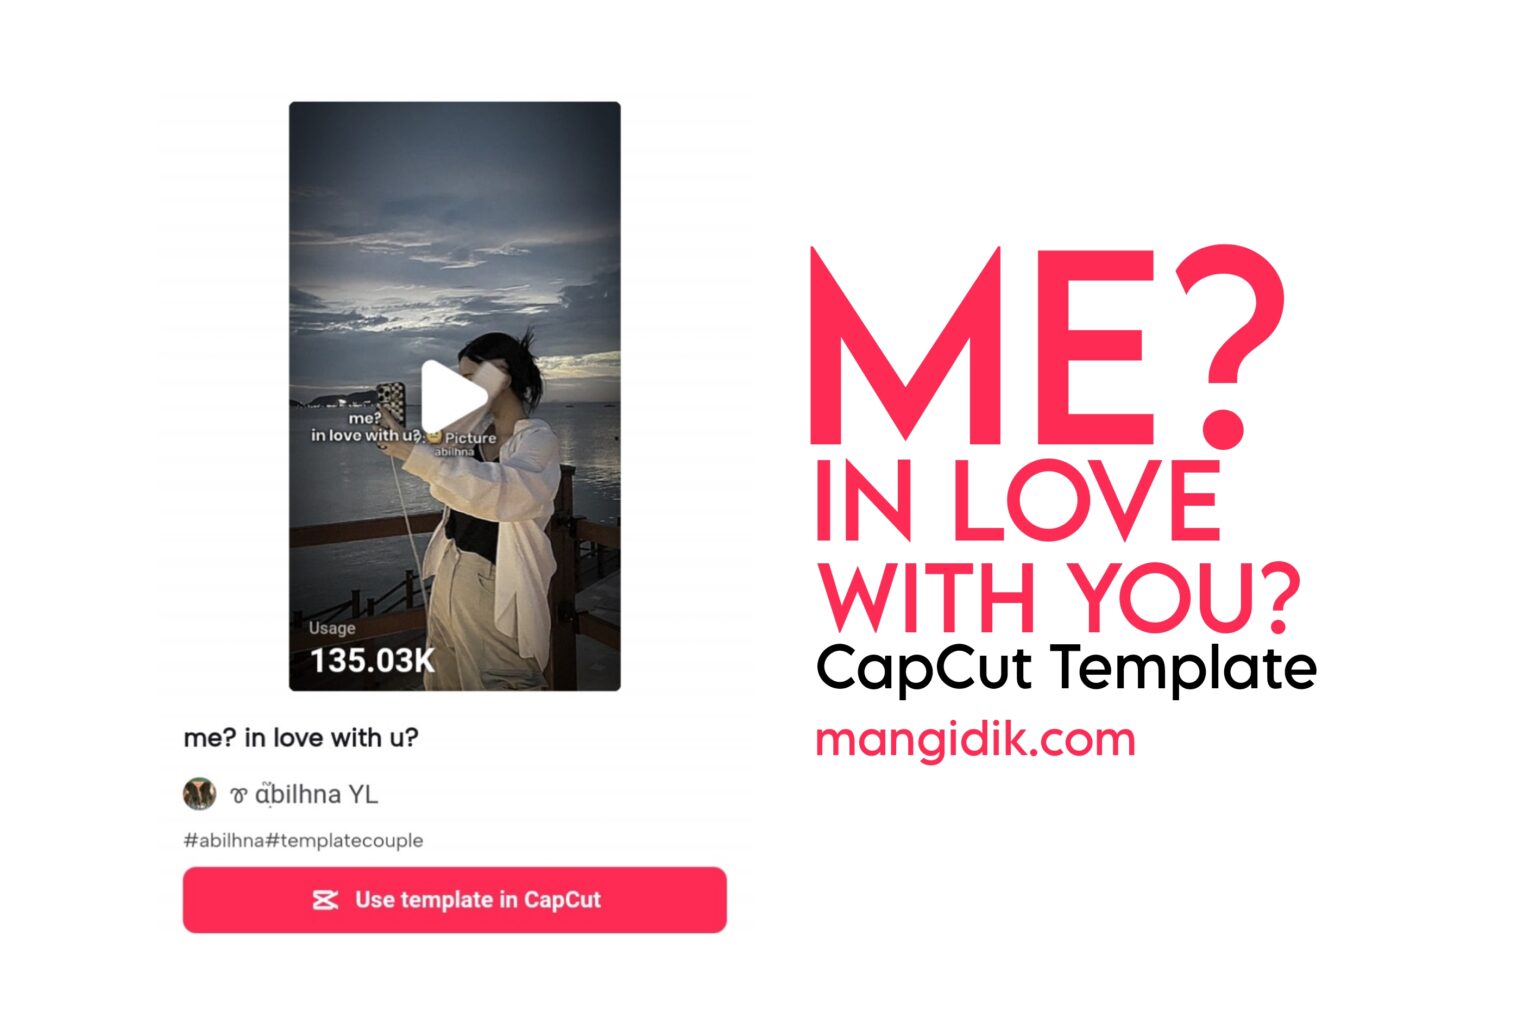 me-in-love-with-you-capcut-template-link-mang-idik